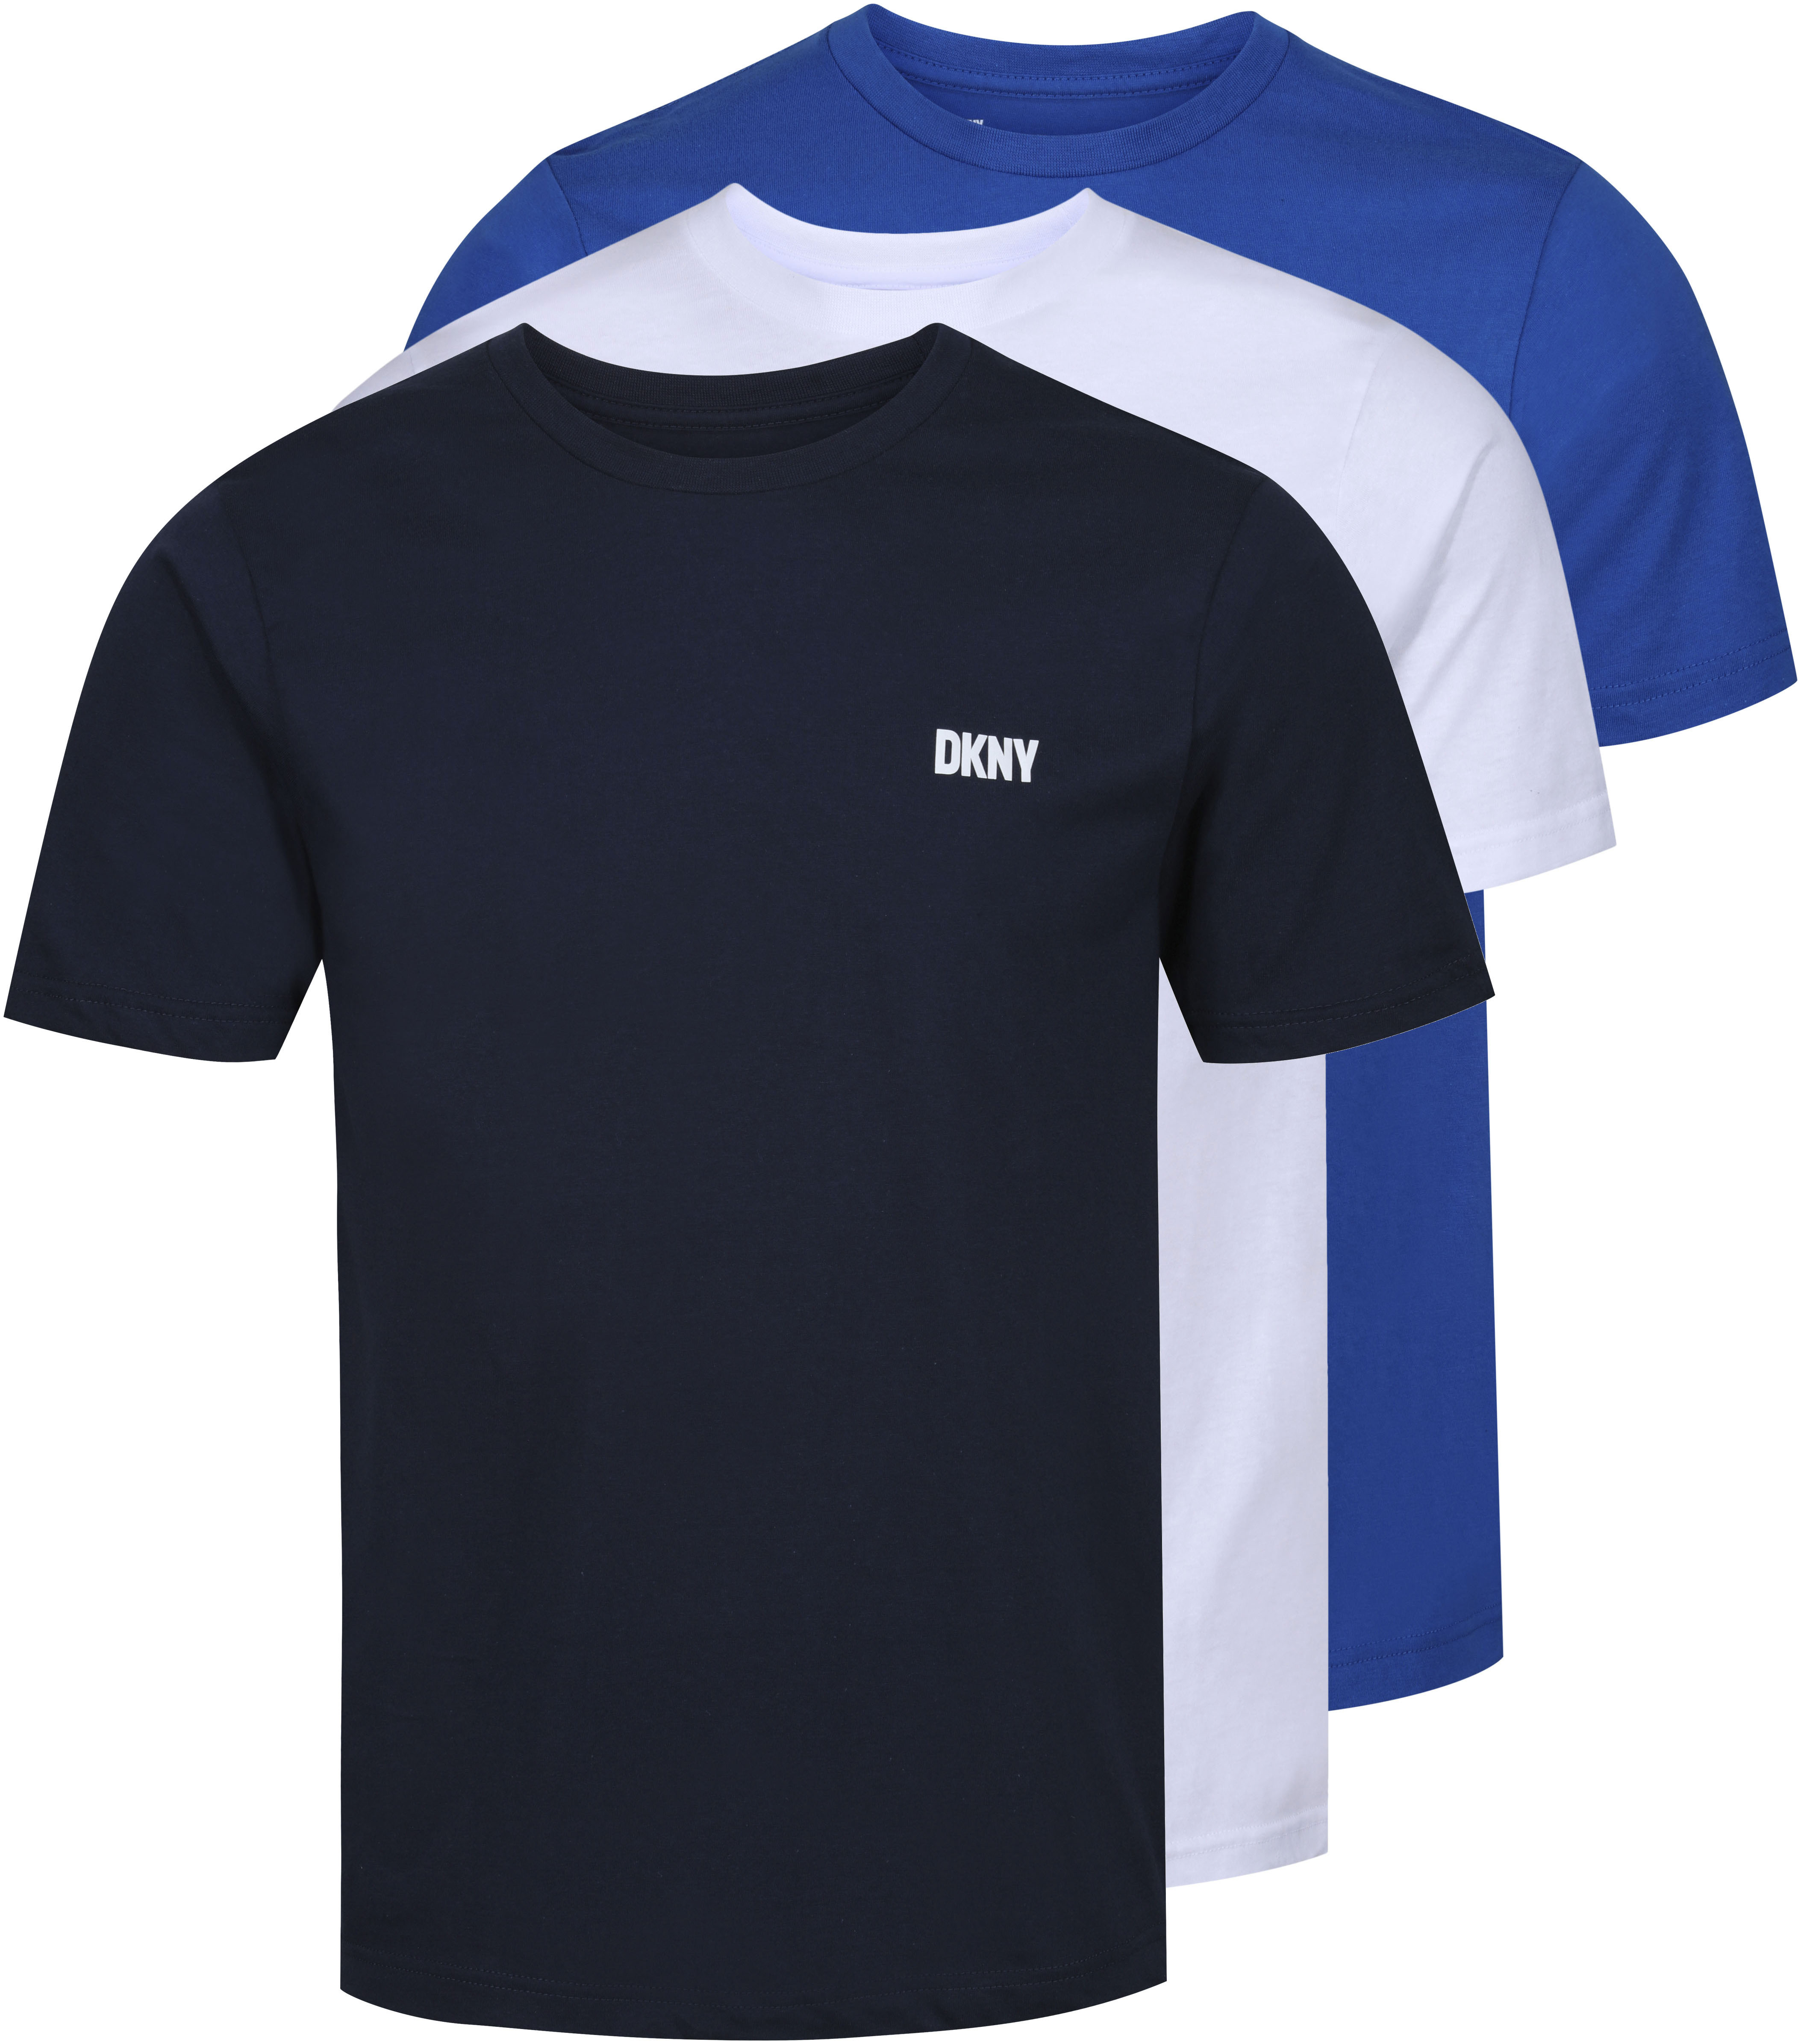 DKNY Herren 3er-Pack T-Shirt 100% Baumwolle, Marineblau/Weiß/Blau, XL